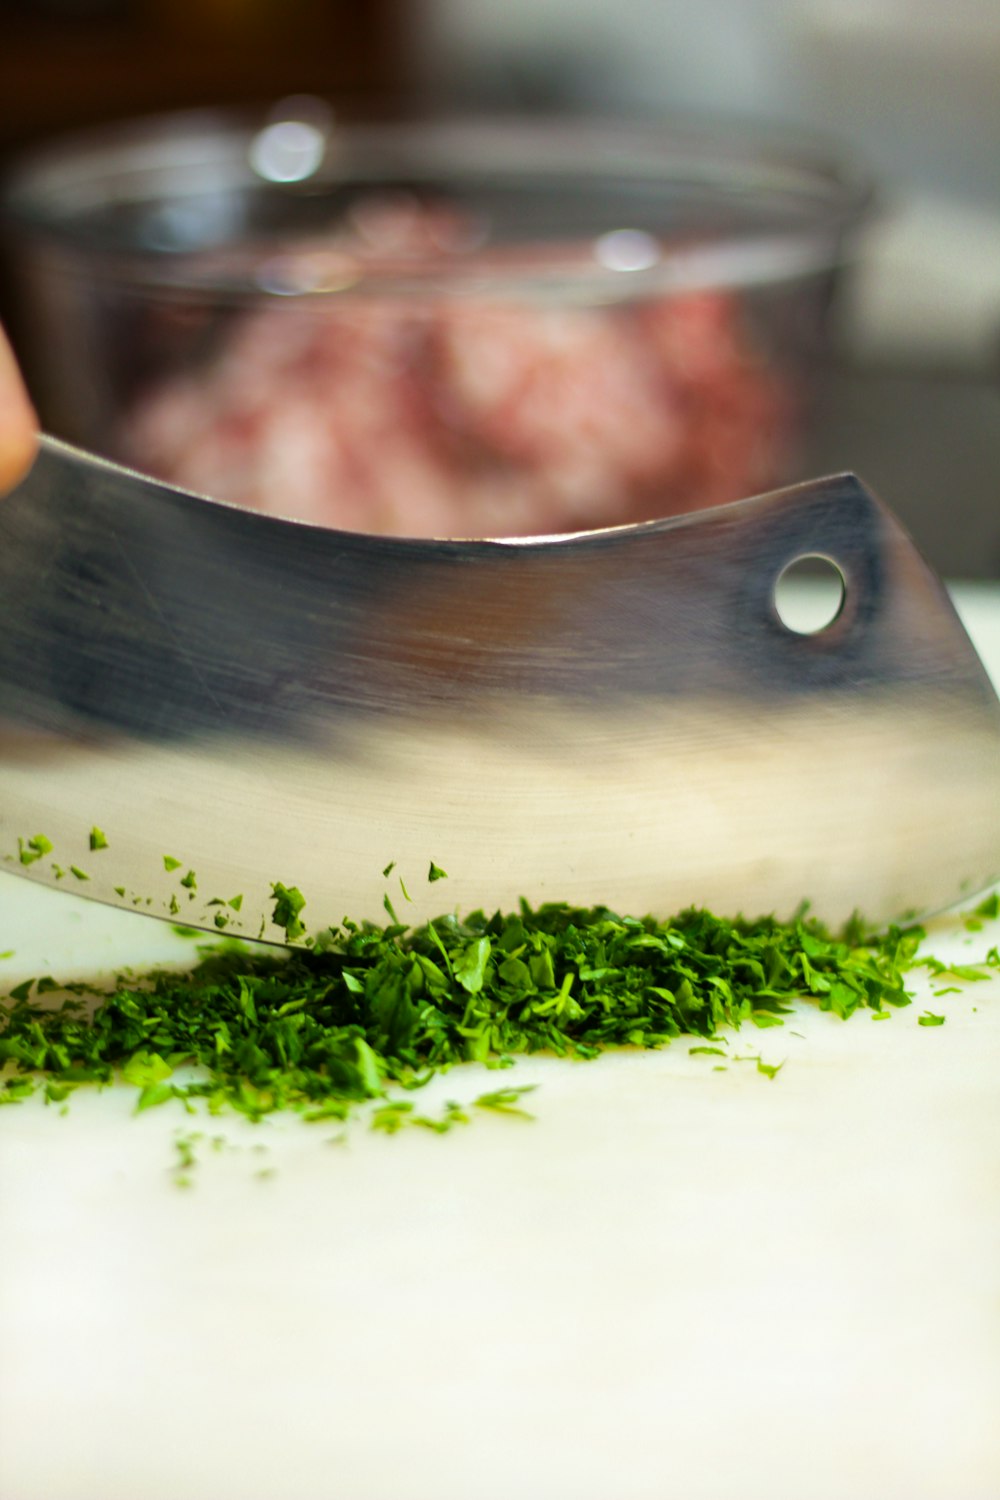 a person chopping green herbs on a cutting board